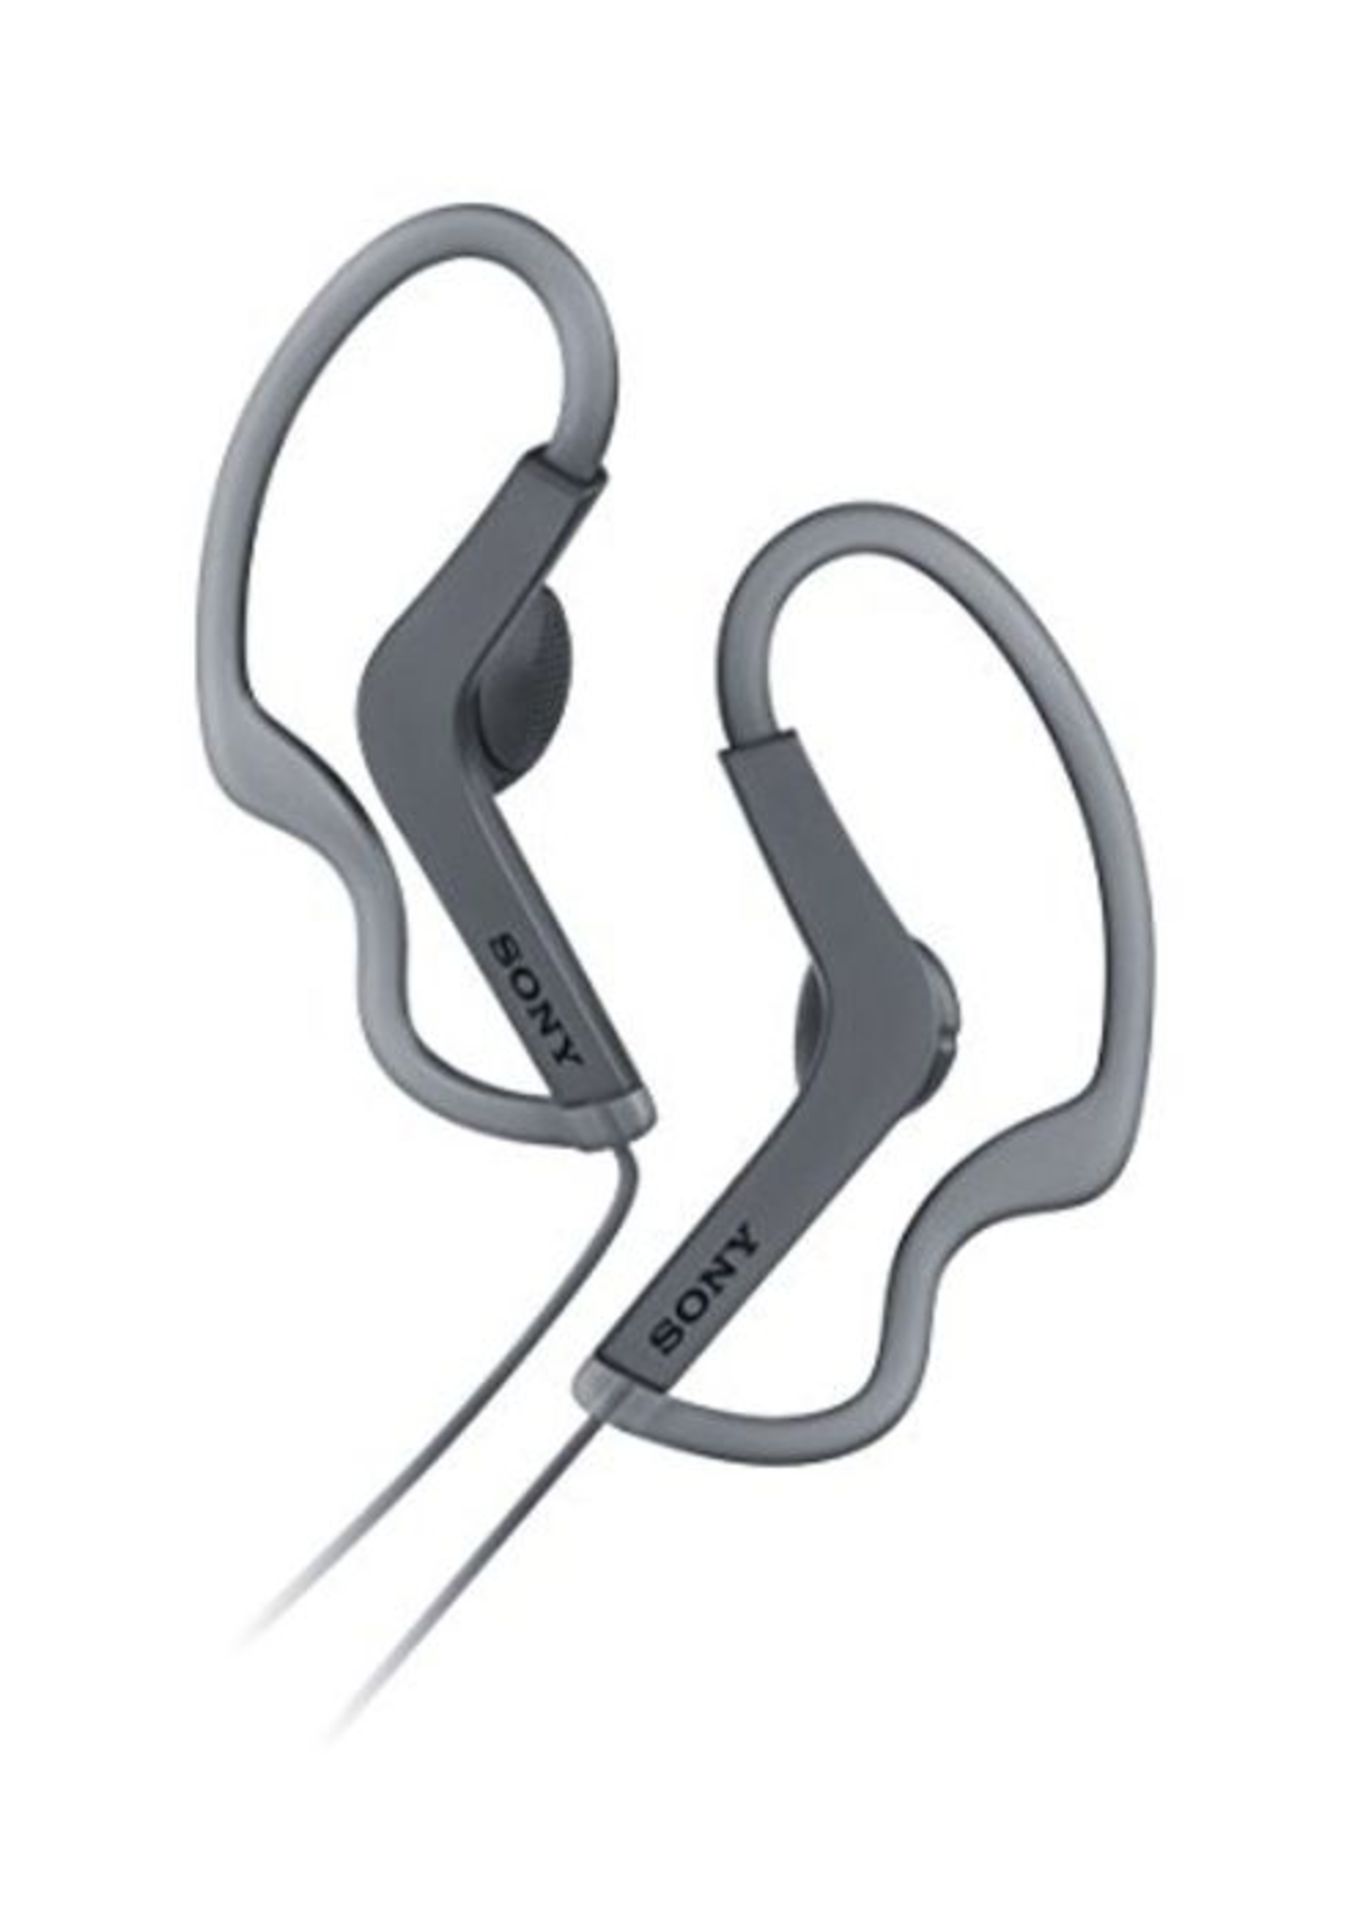 Sony MDR-AS210AP Sports In-Ear Splashproof Headphones with In Line Mic - Black